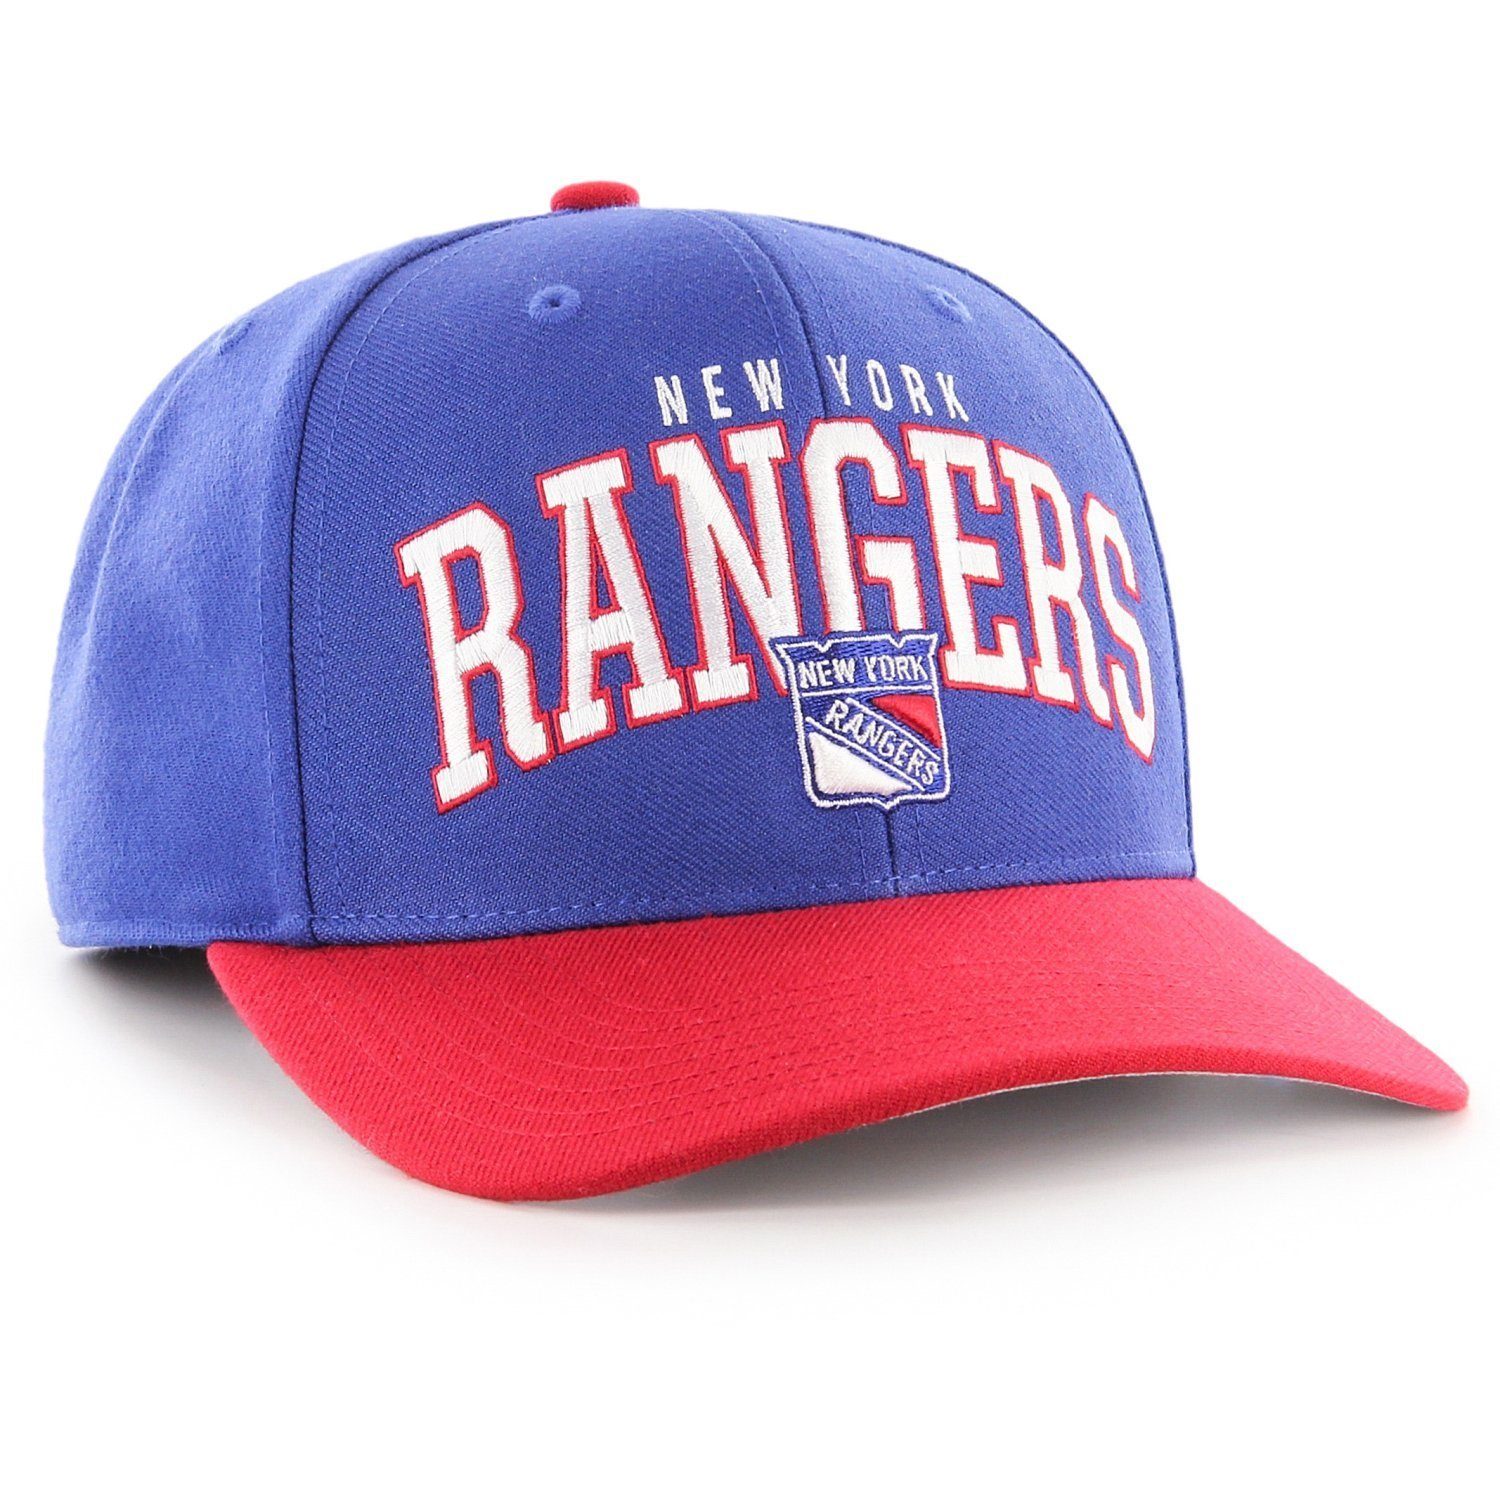 York Brand Profile Rangers New Low '47 Cap Baseball McCaw